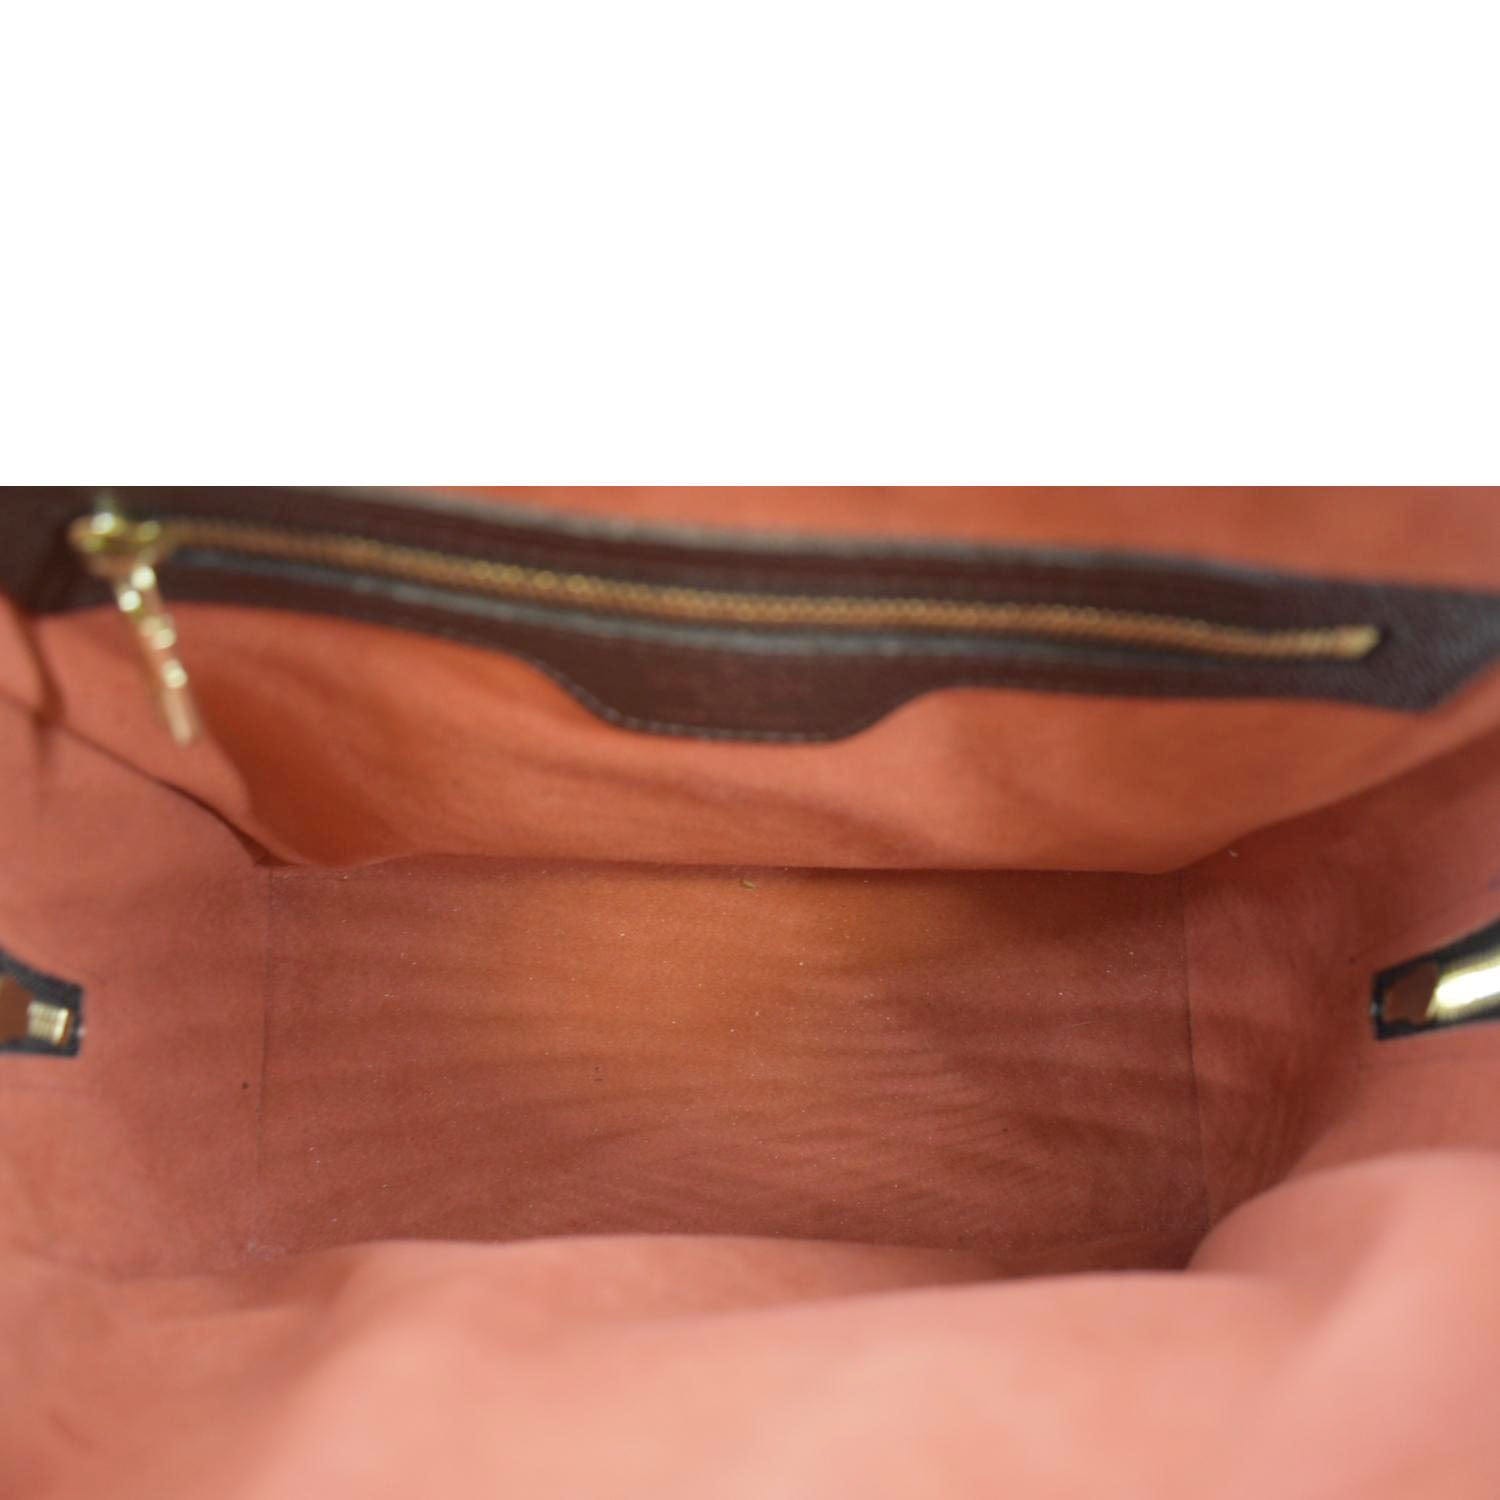 TRUUBEAUTYS💧  Louis vuitton handbags, Purses and handbags, Pretty bags